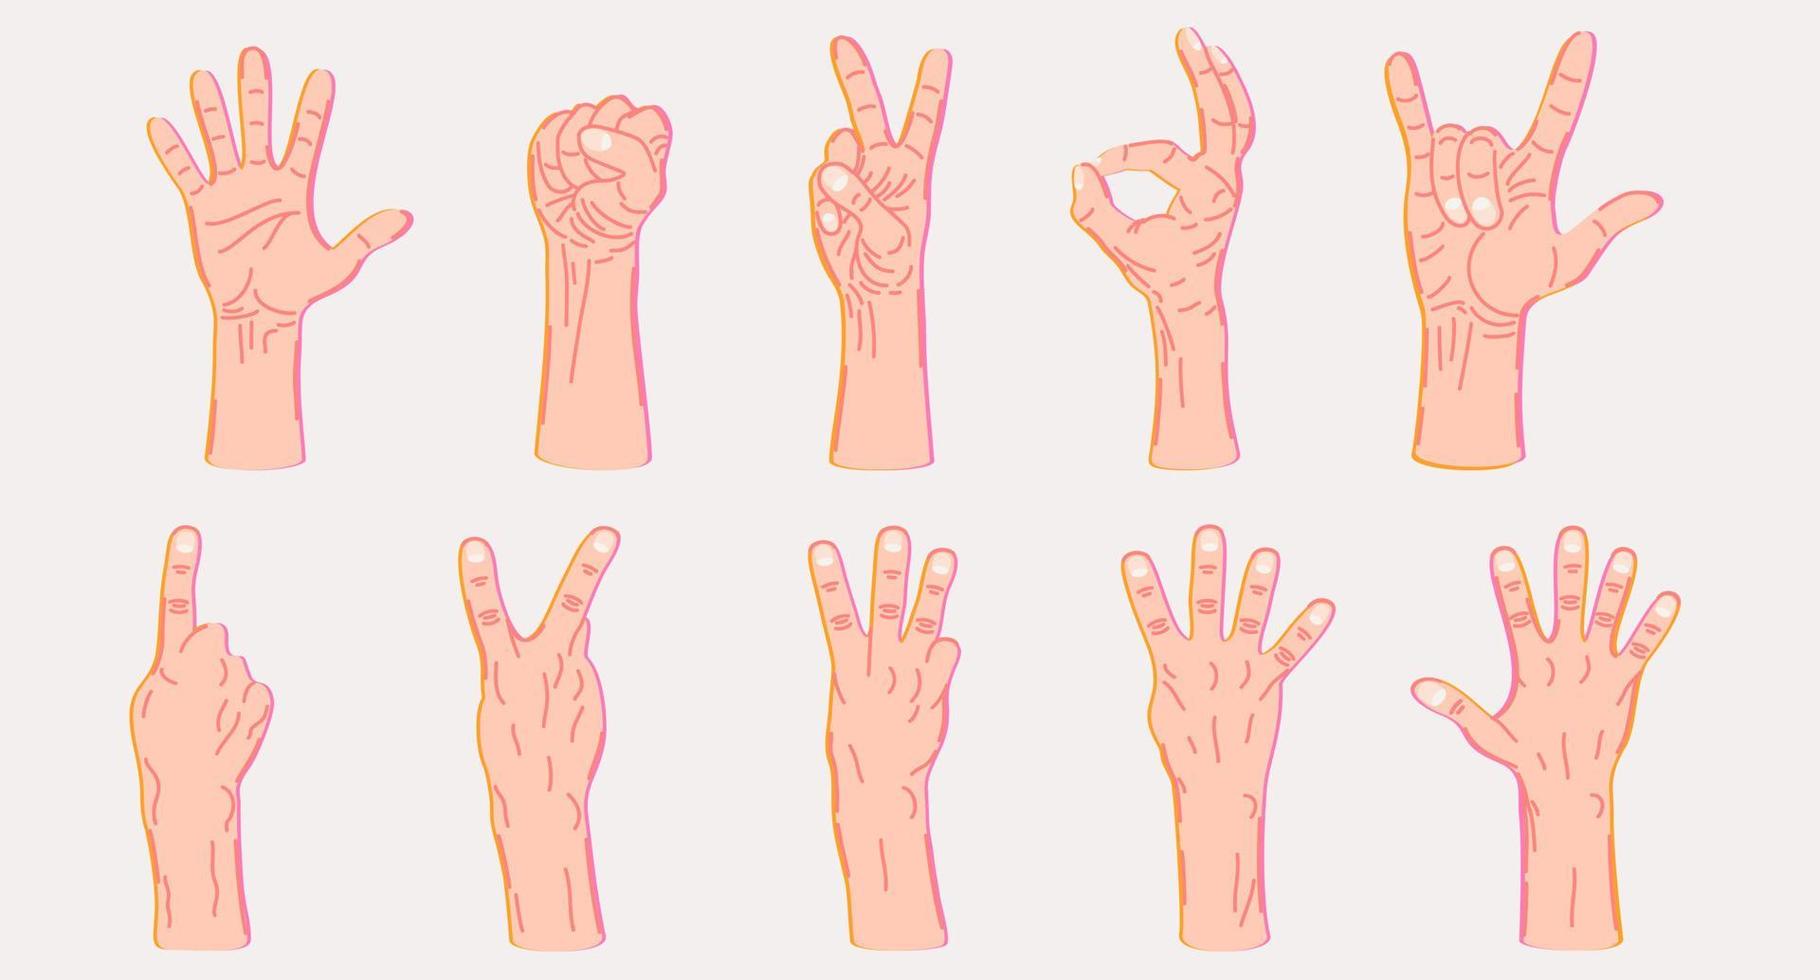 ensemble vectoriel de différents gestes de la main.